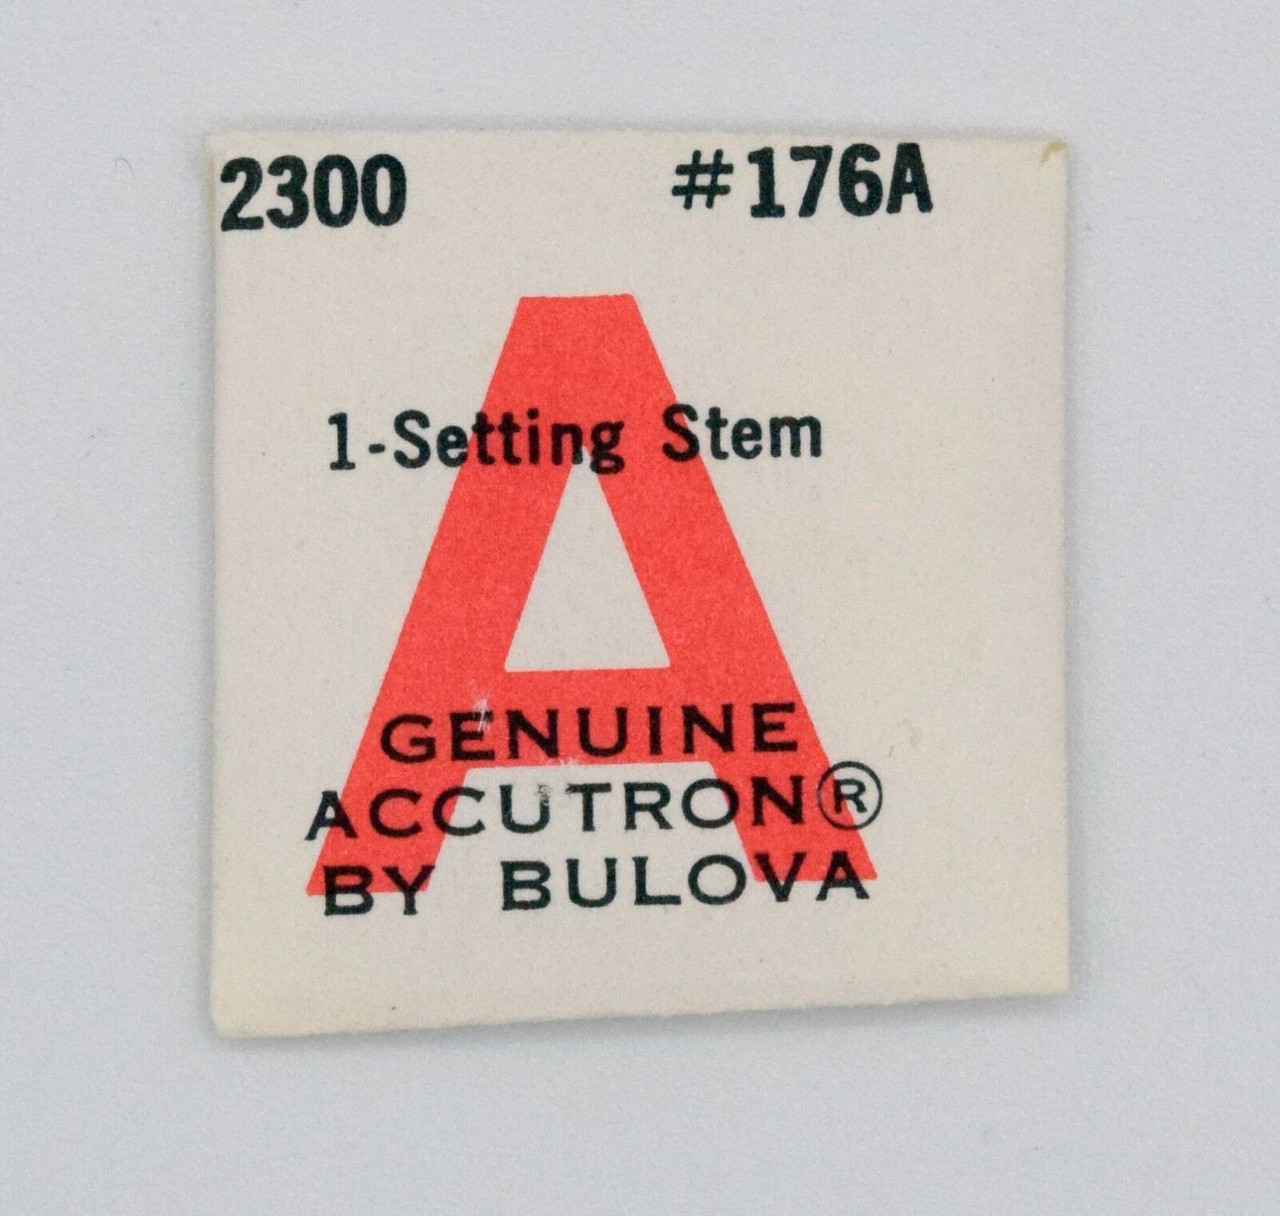 Bulova Accutron 2300 Setting Stem Part #176